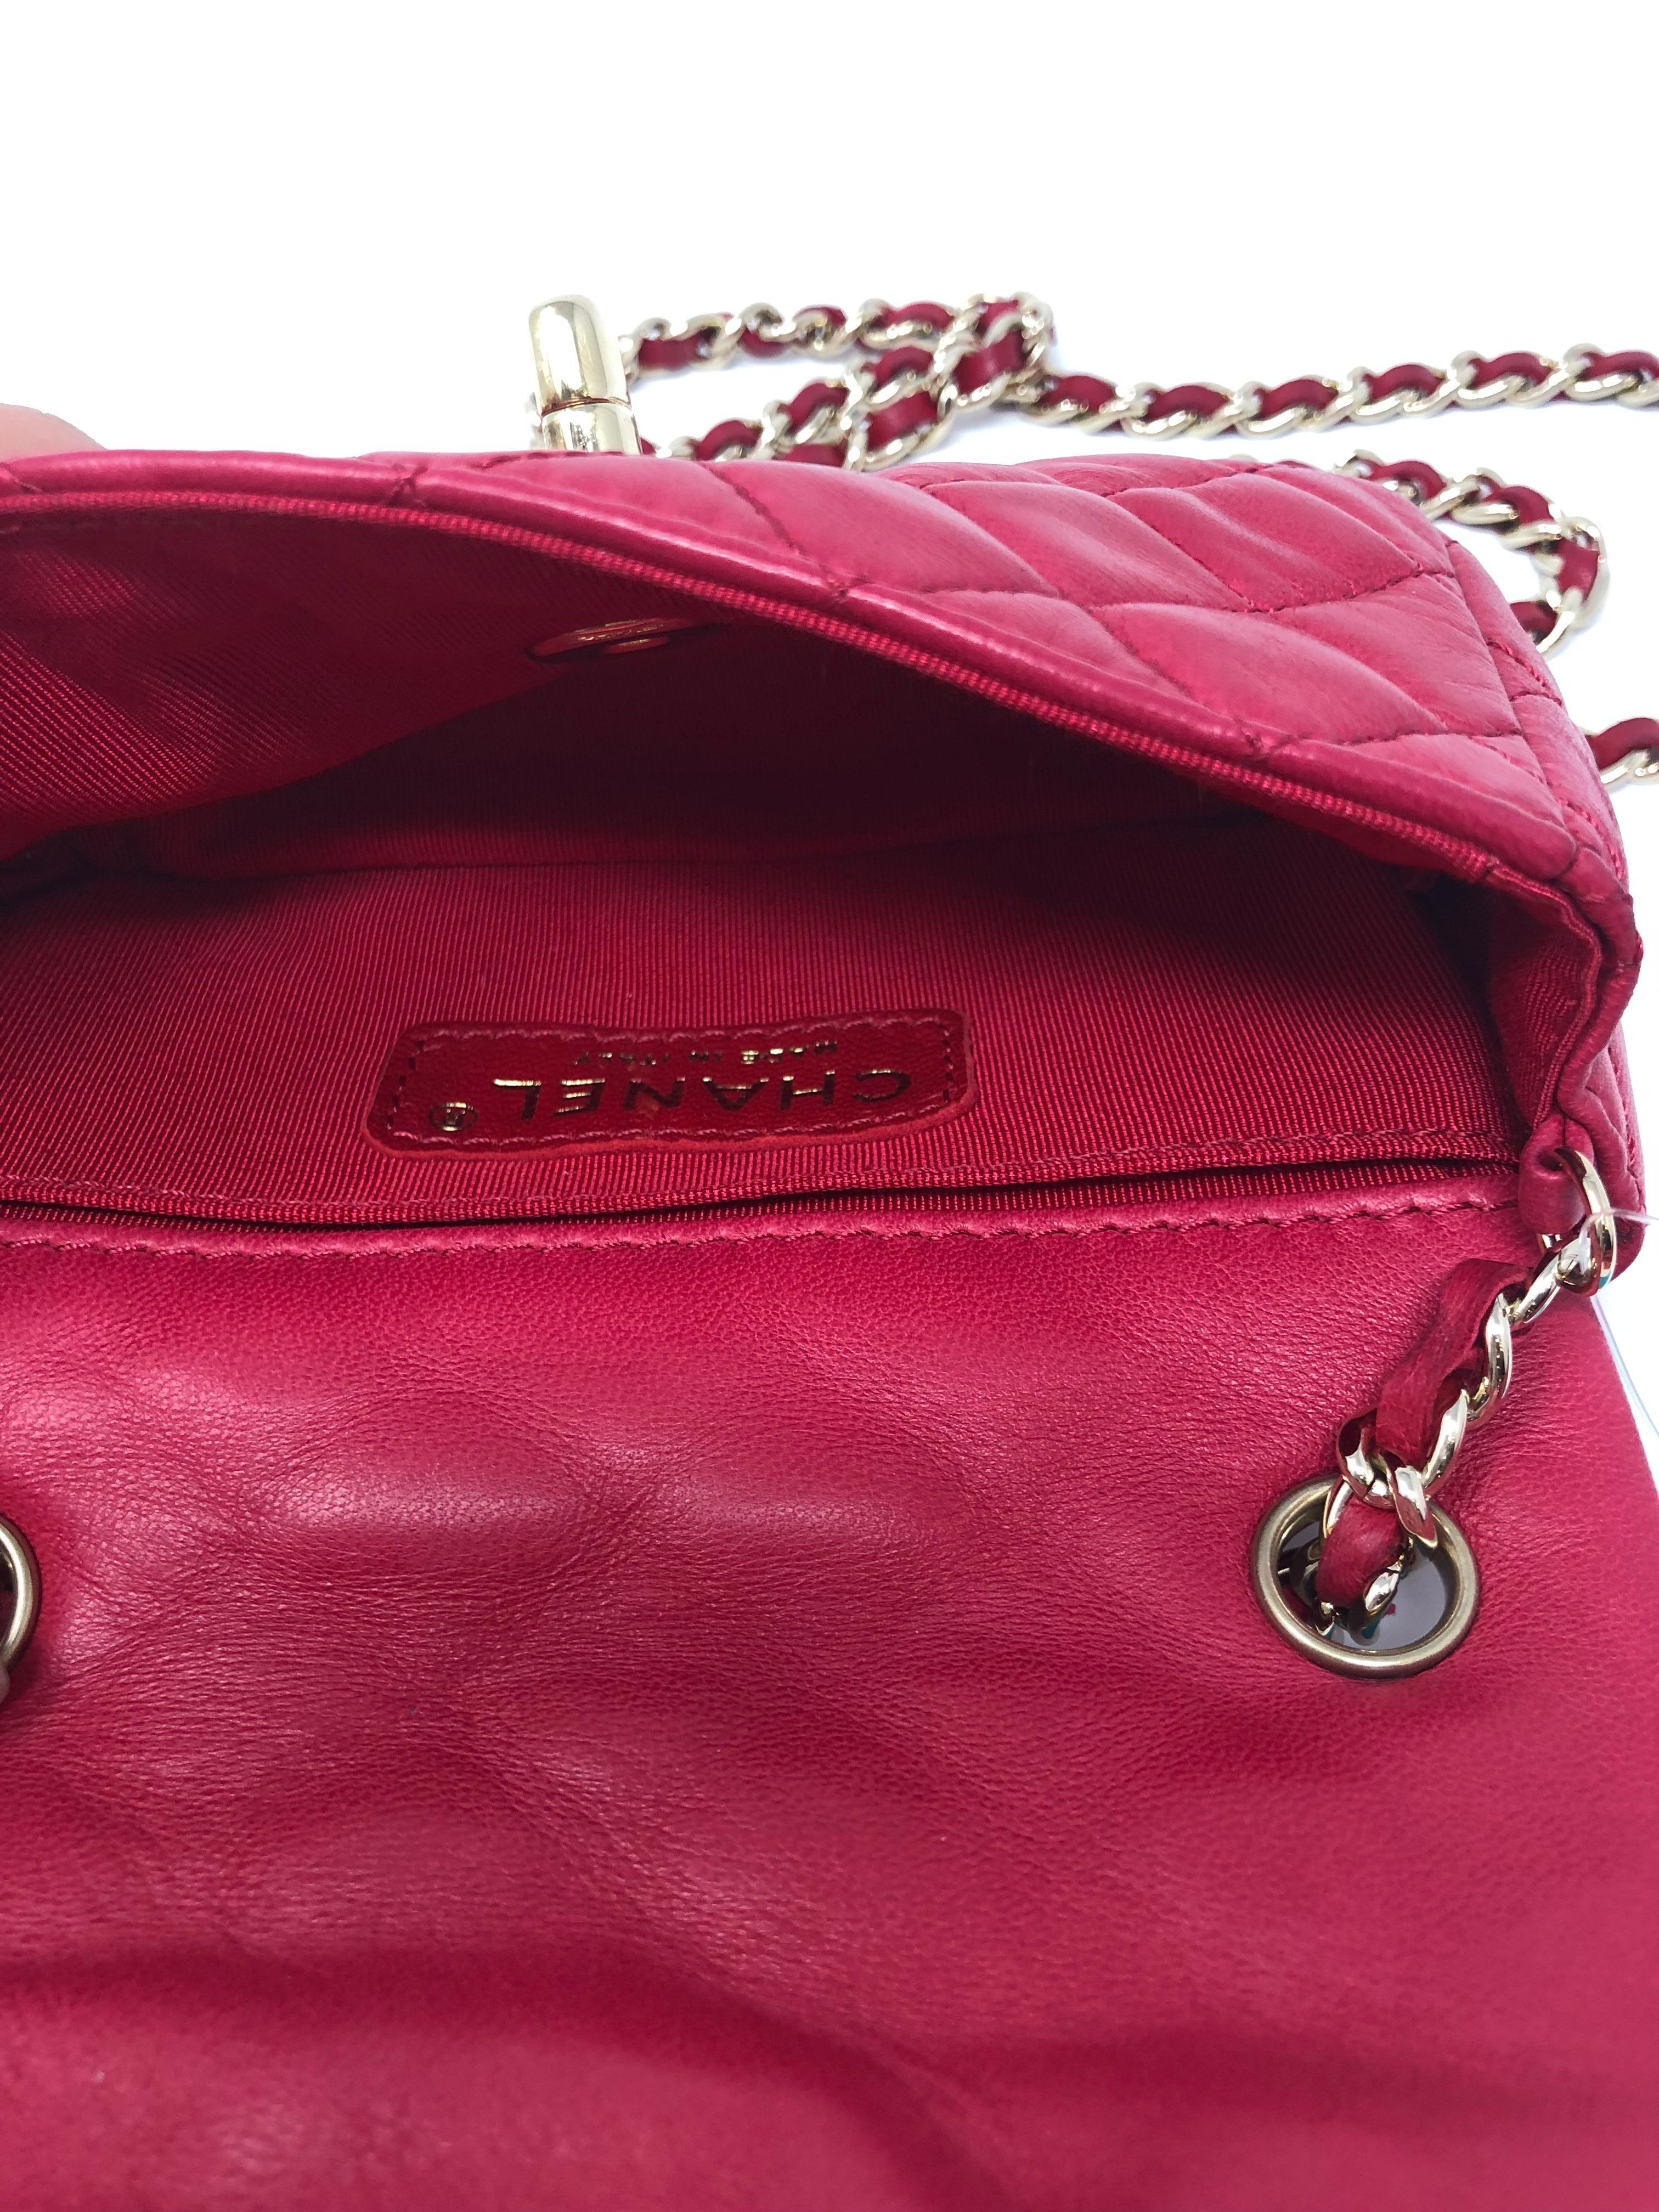 Chanel XS Mini Valentine's Bag 3